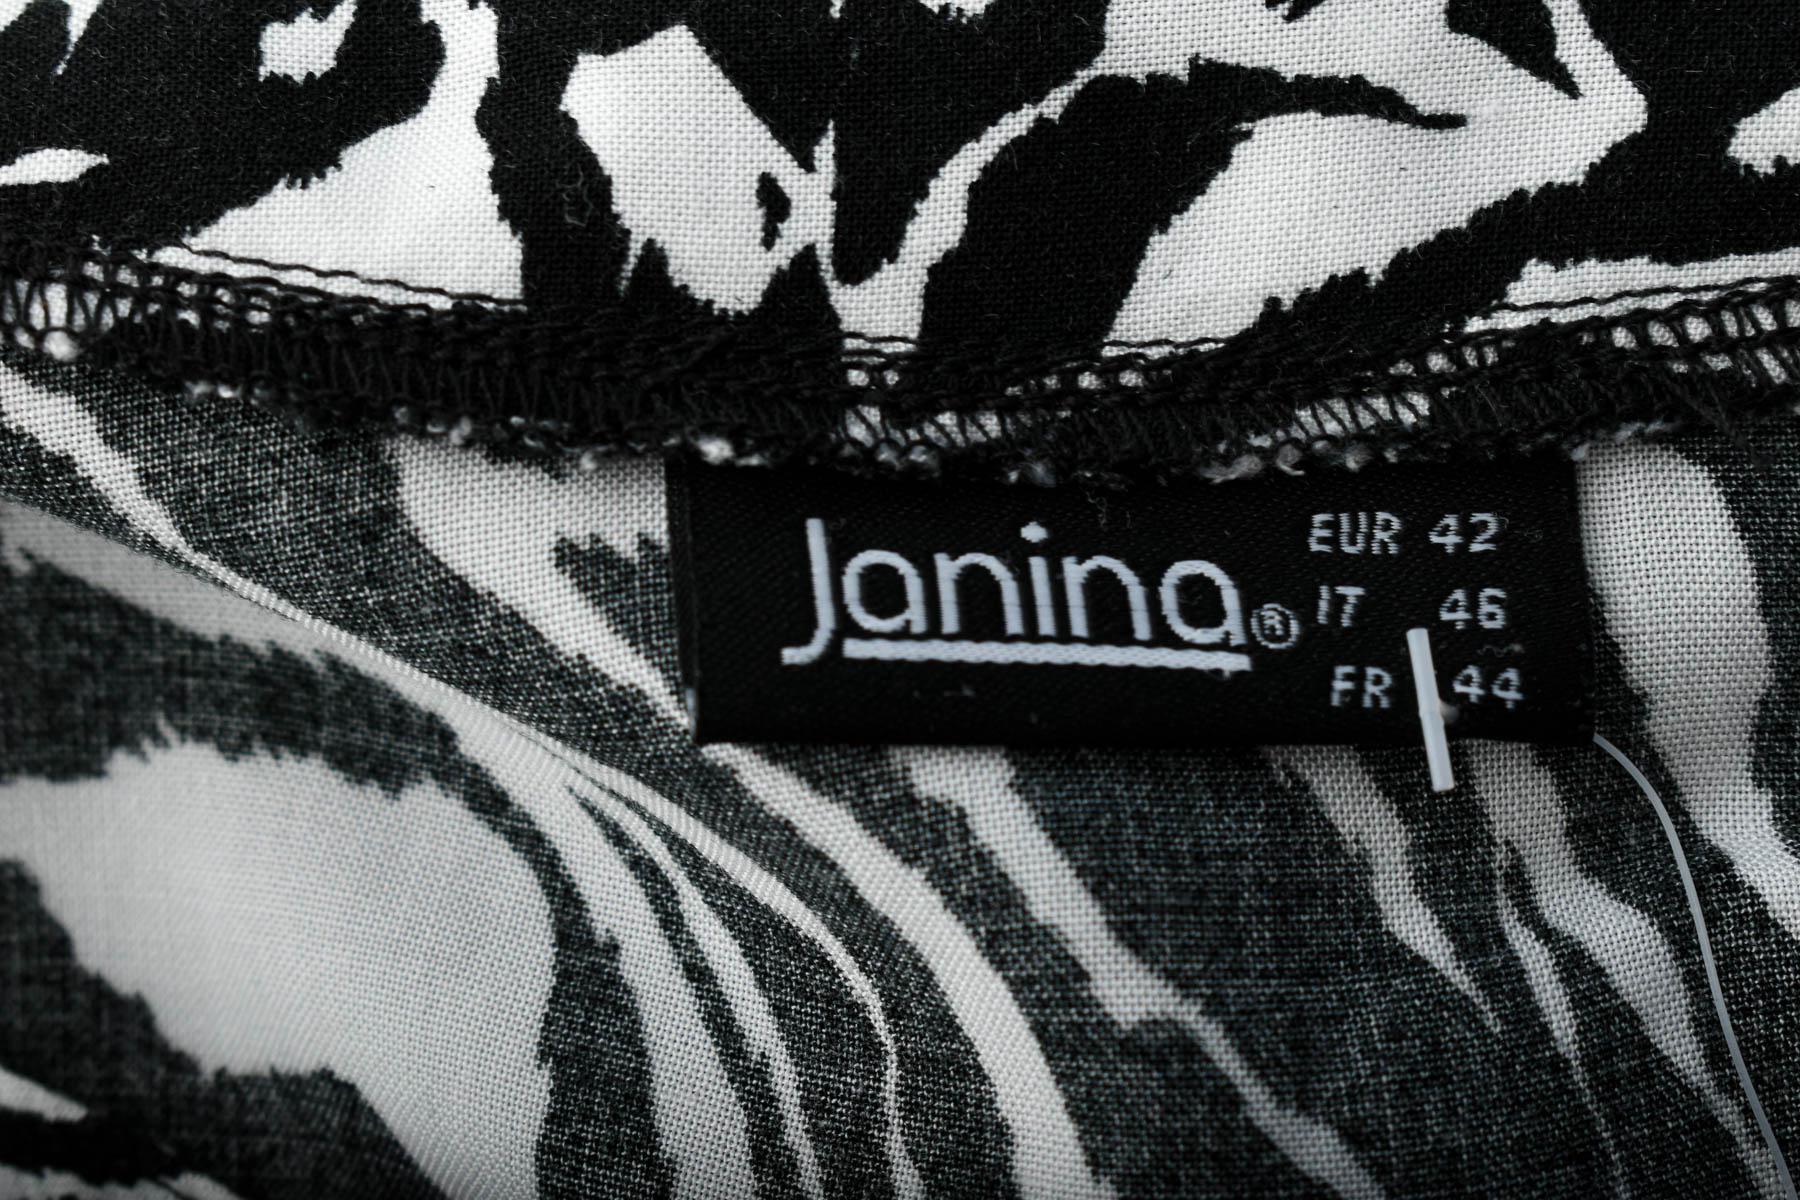 Women's shirt - Janina - 2